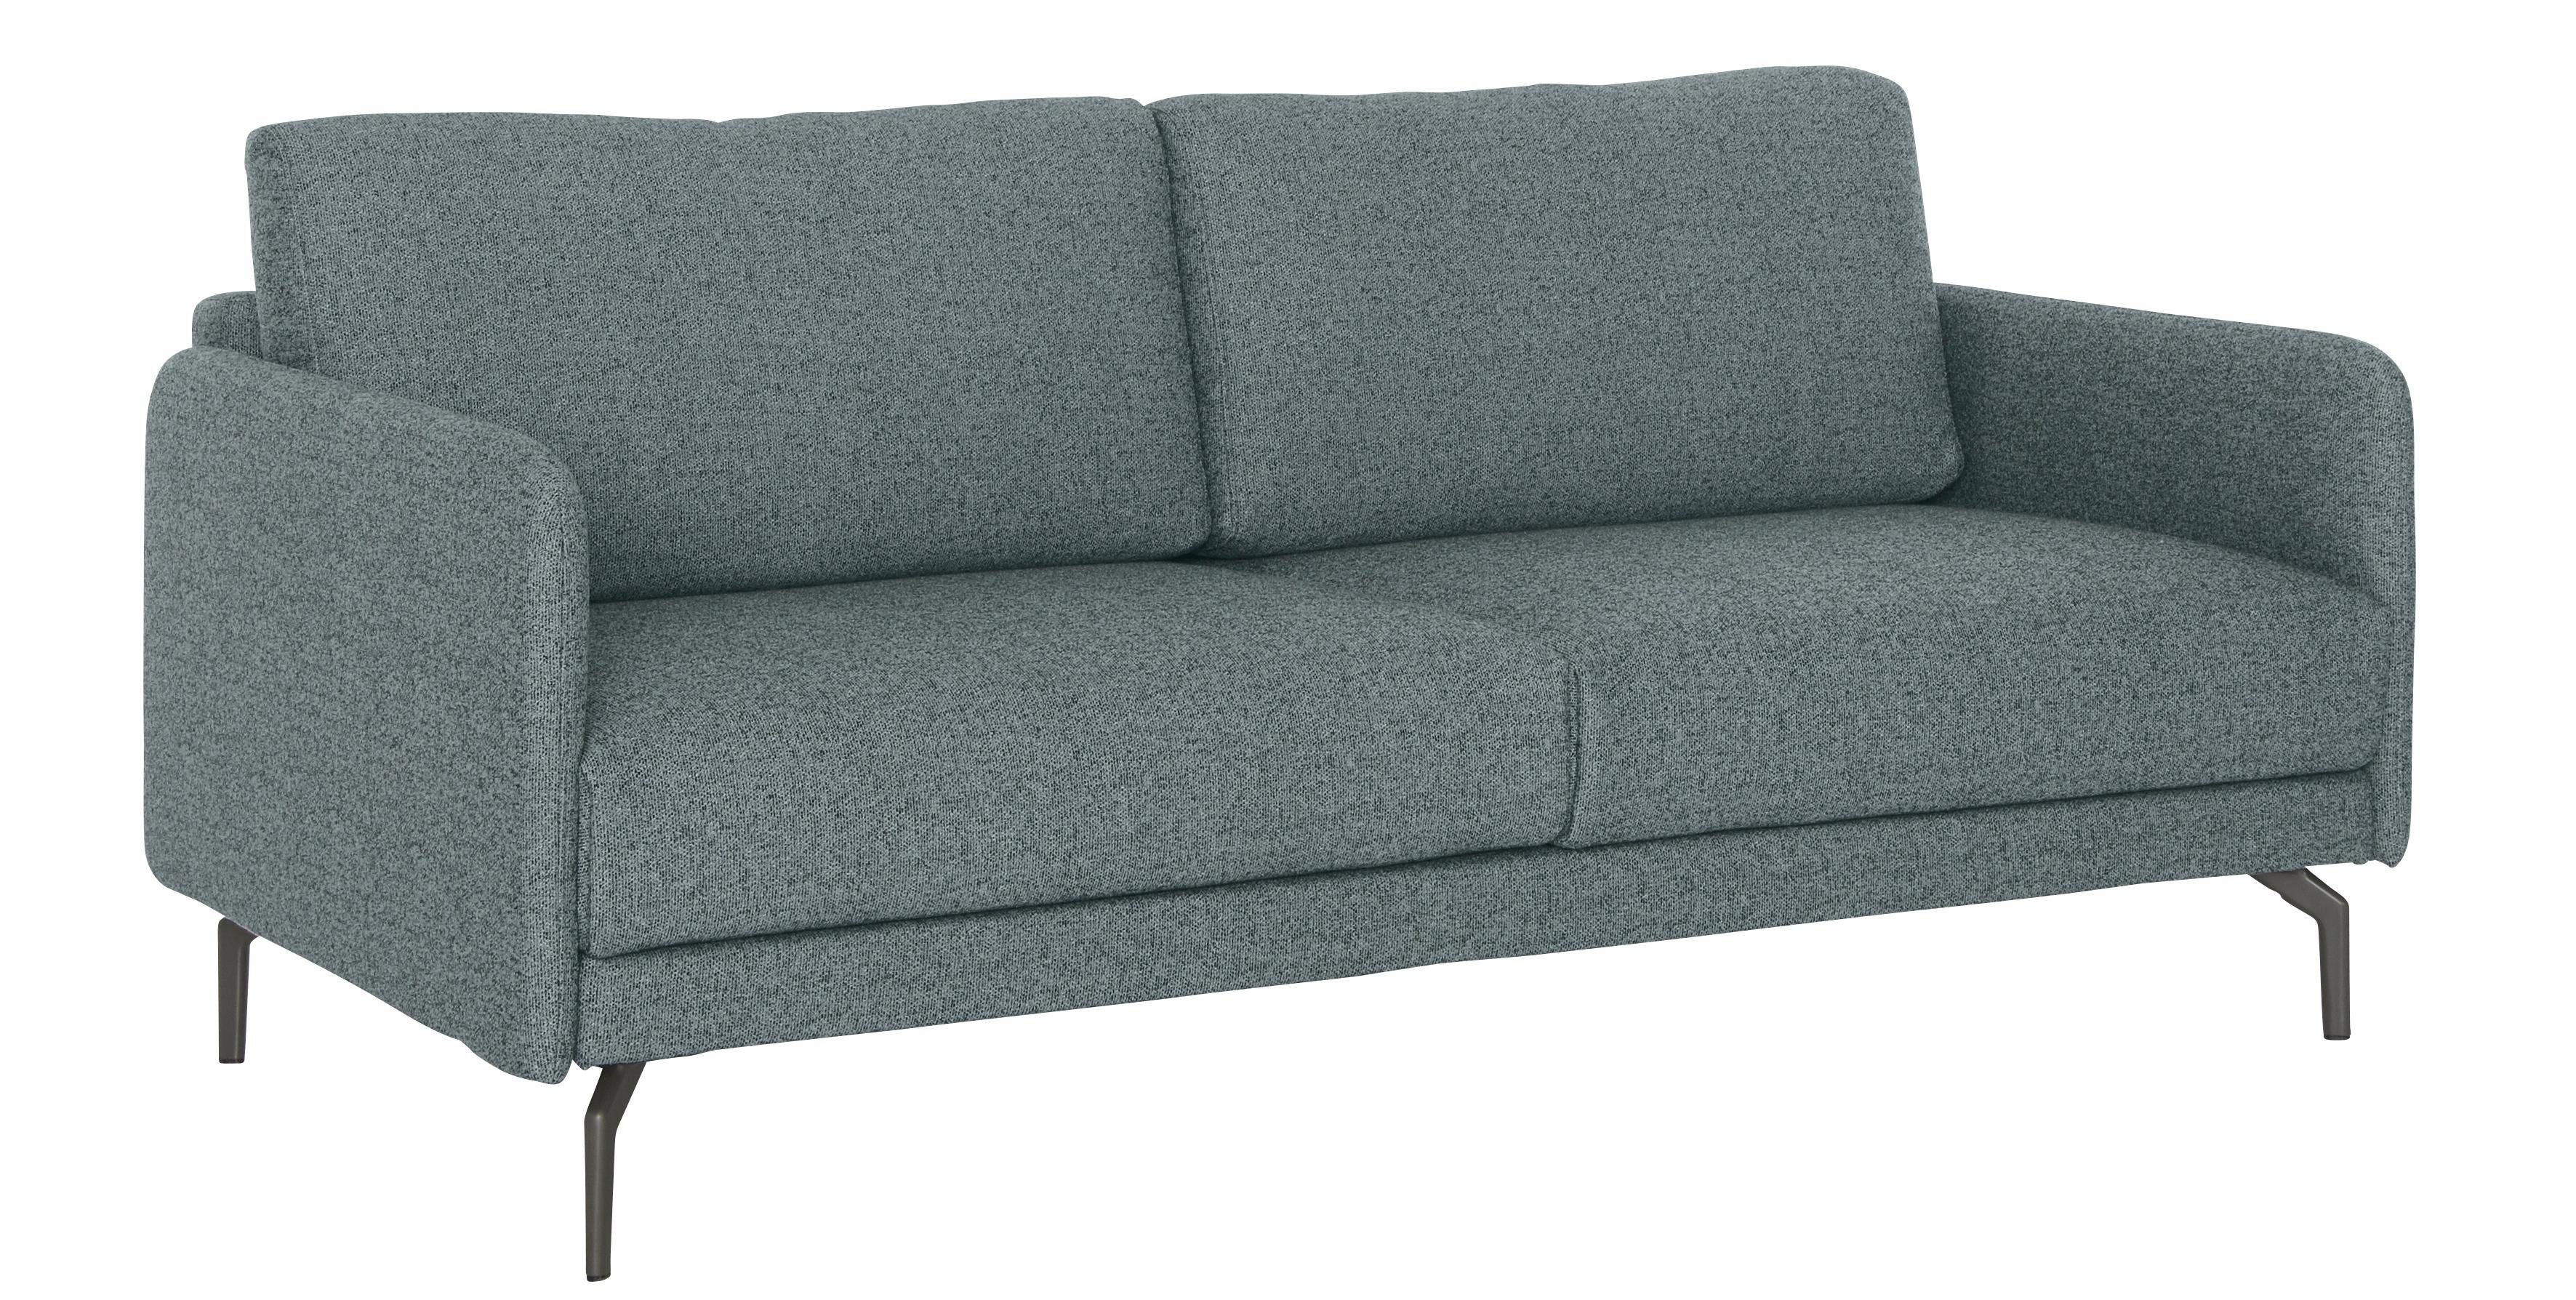 Breite in hülsta hs.450, 2-Sitzer umbragrau, schmal, sofa Armlehne Alugussfüße 150 sehr cm